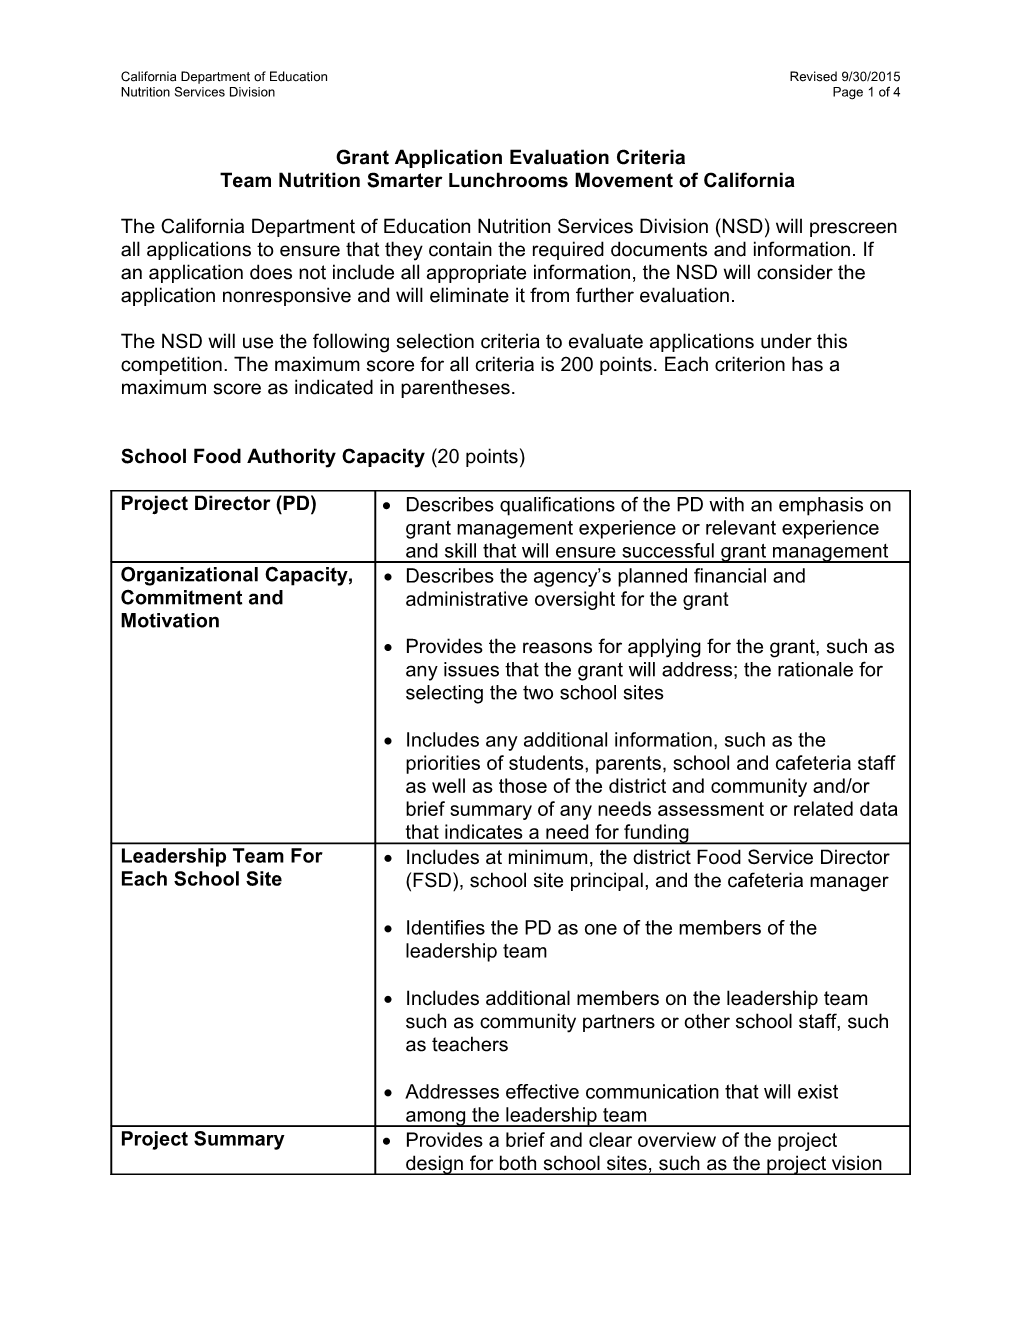 RFA-15: TNSLM Criteria (CA Dept of Education)